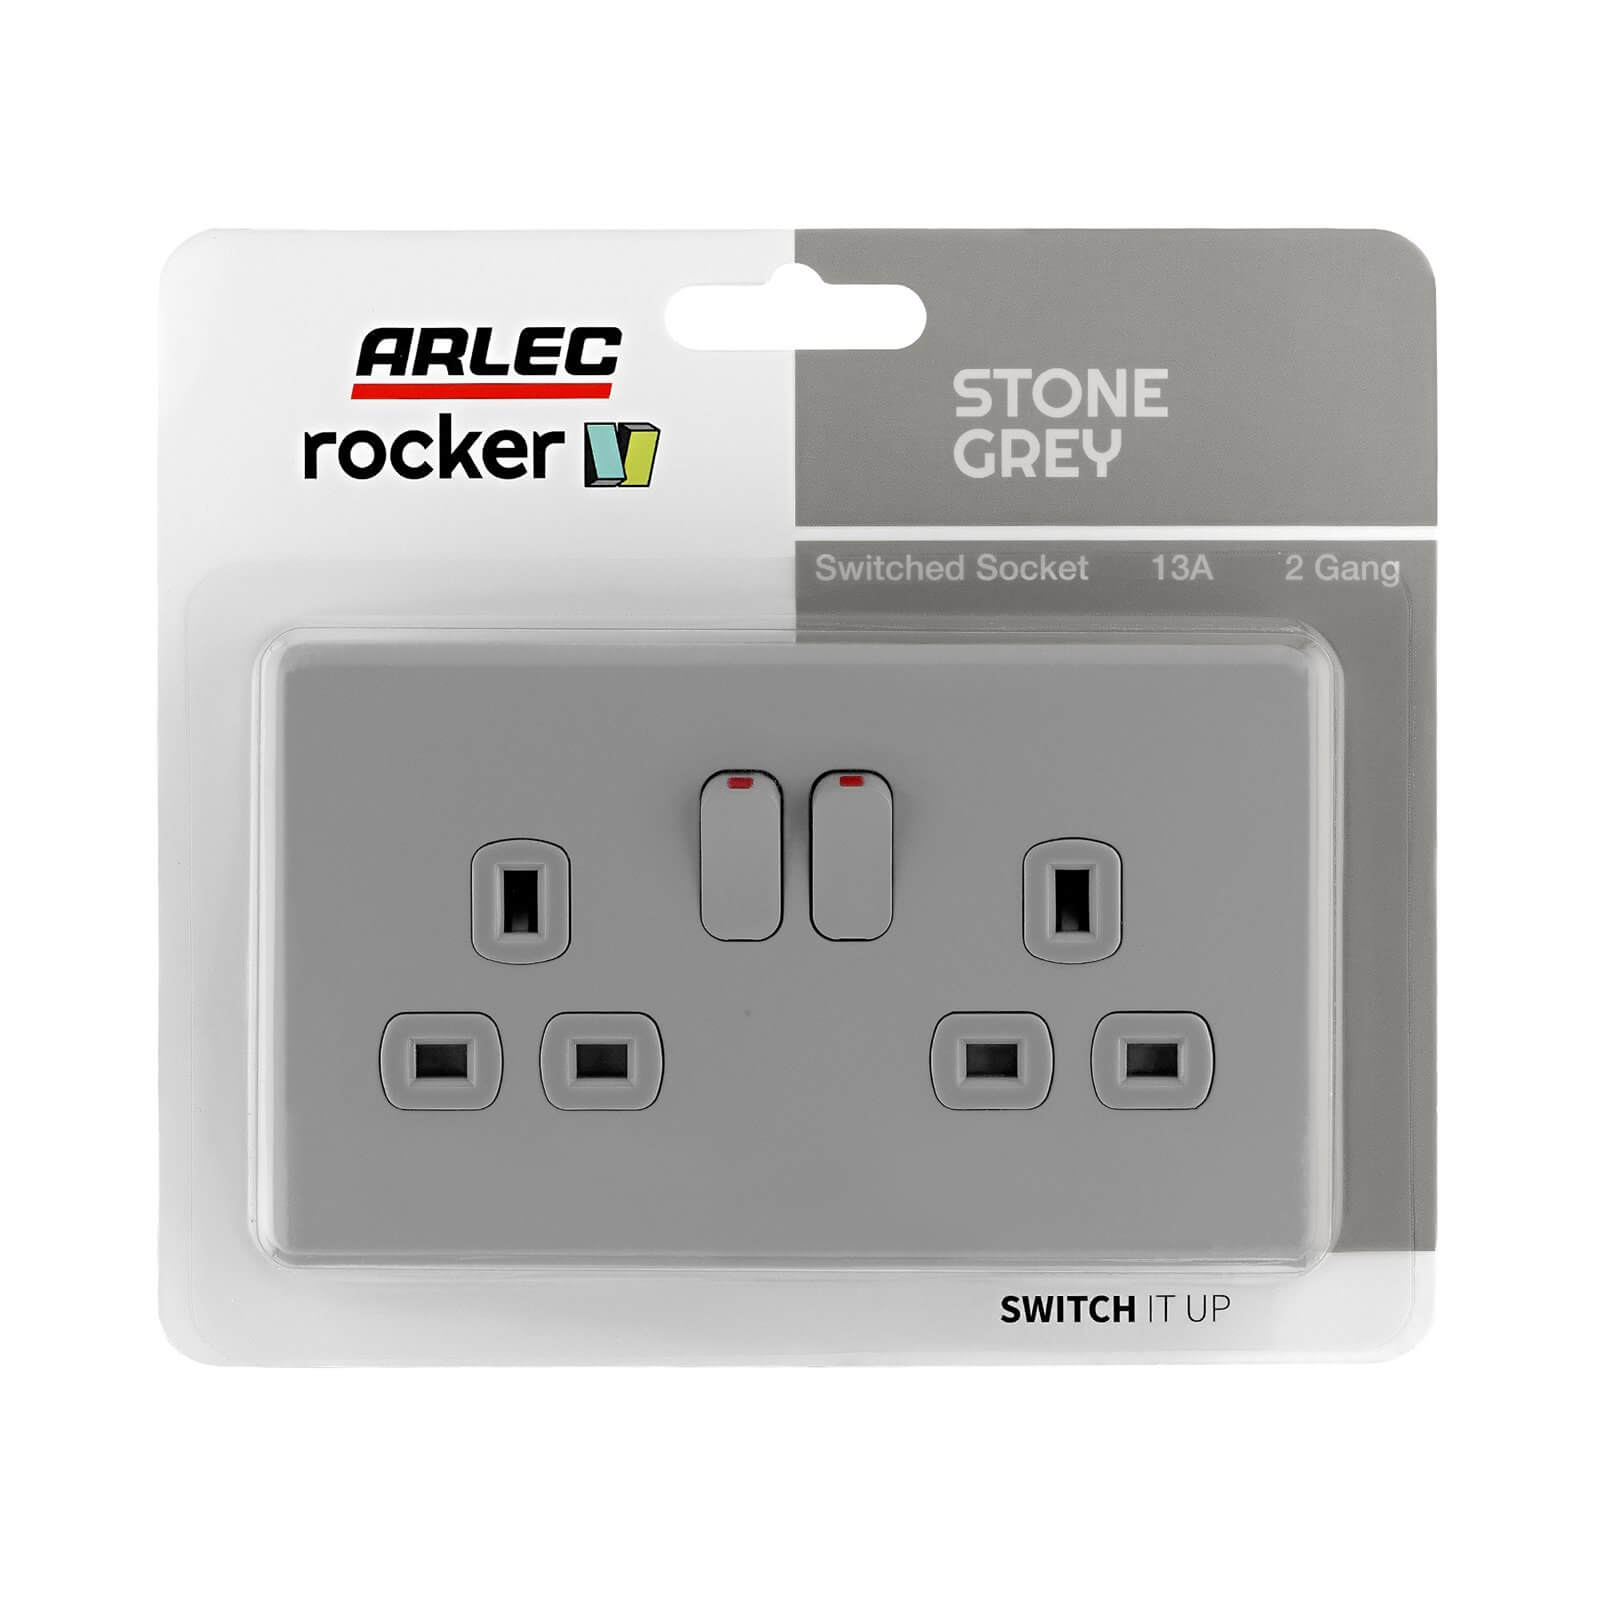 Arlec Rocker 13A 2 Gang Stone Grey Double switched socket